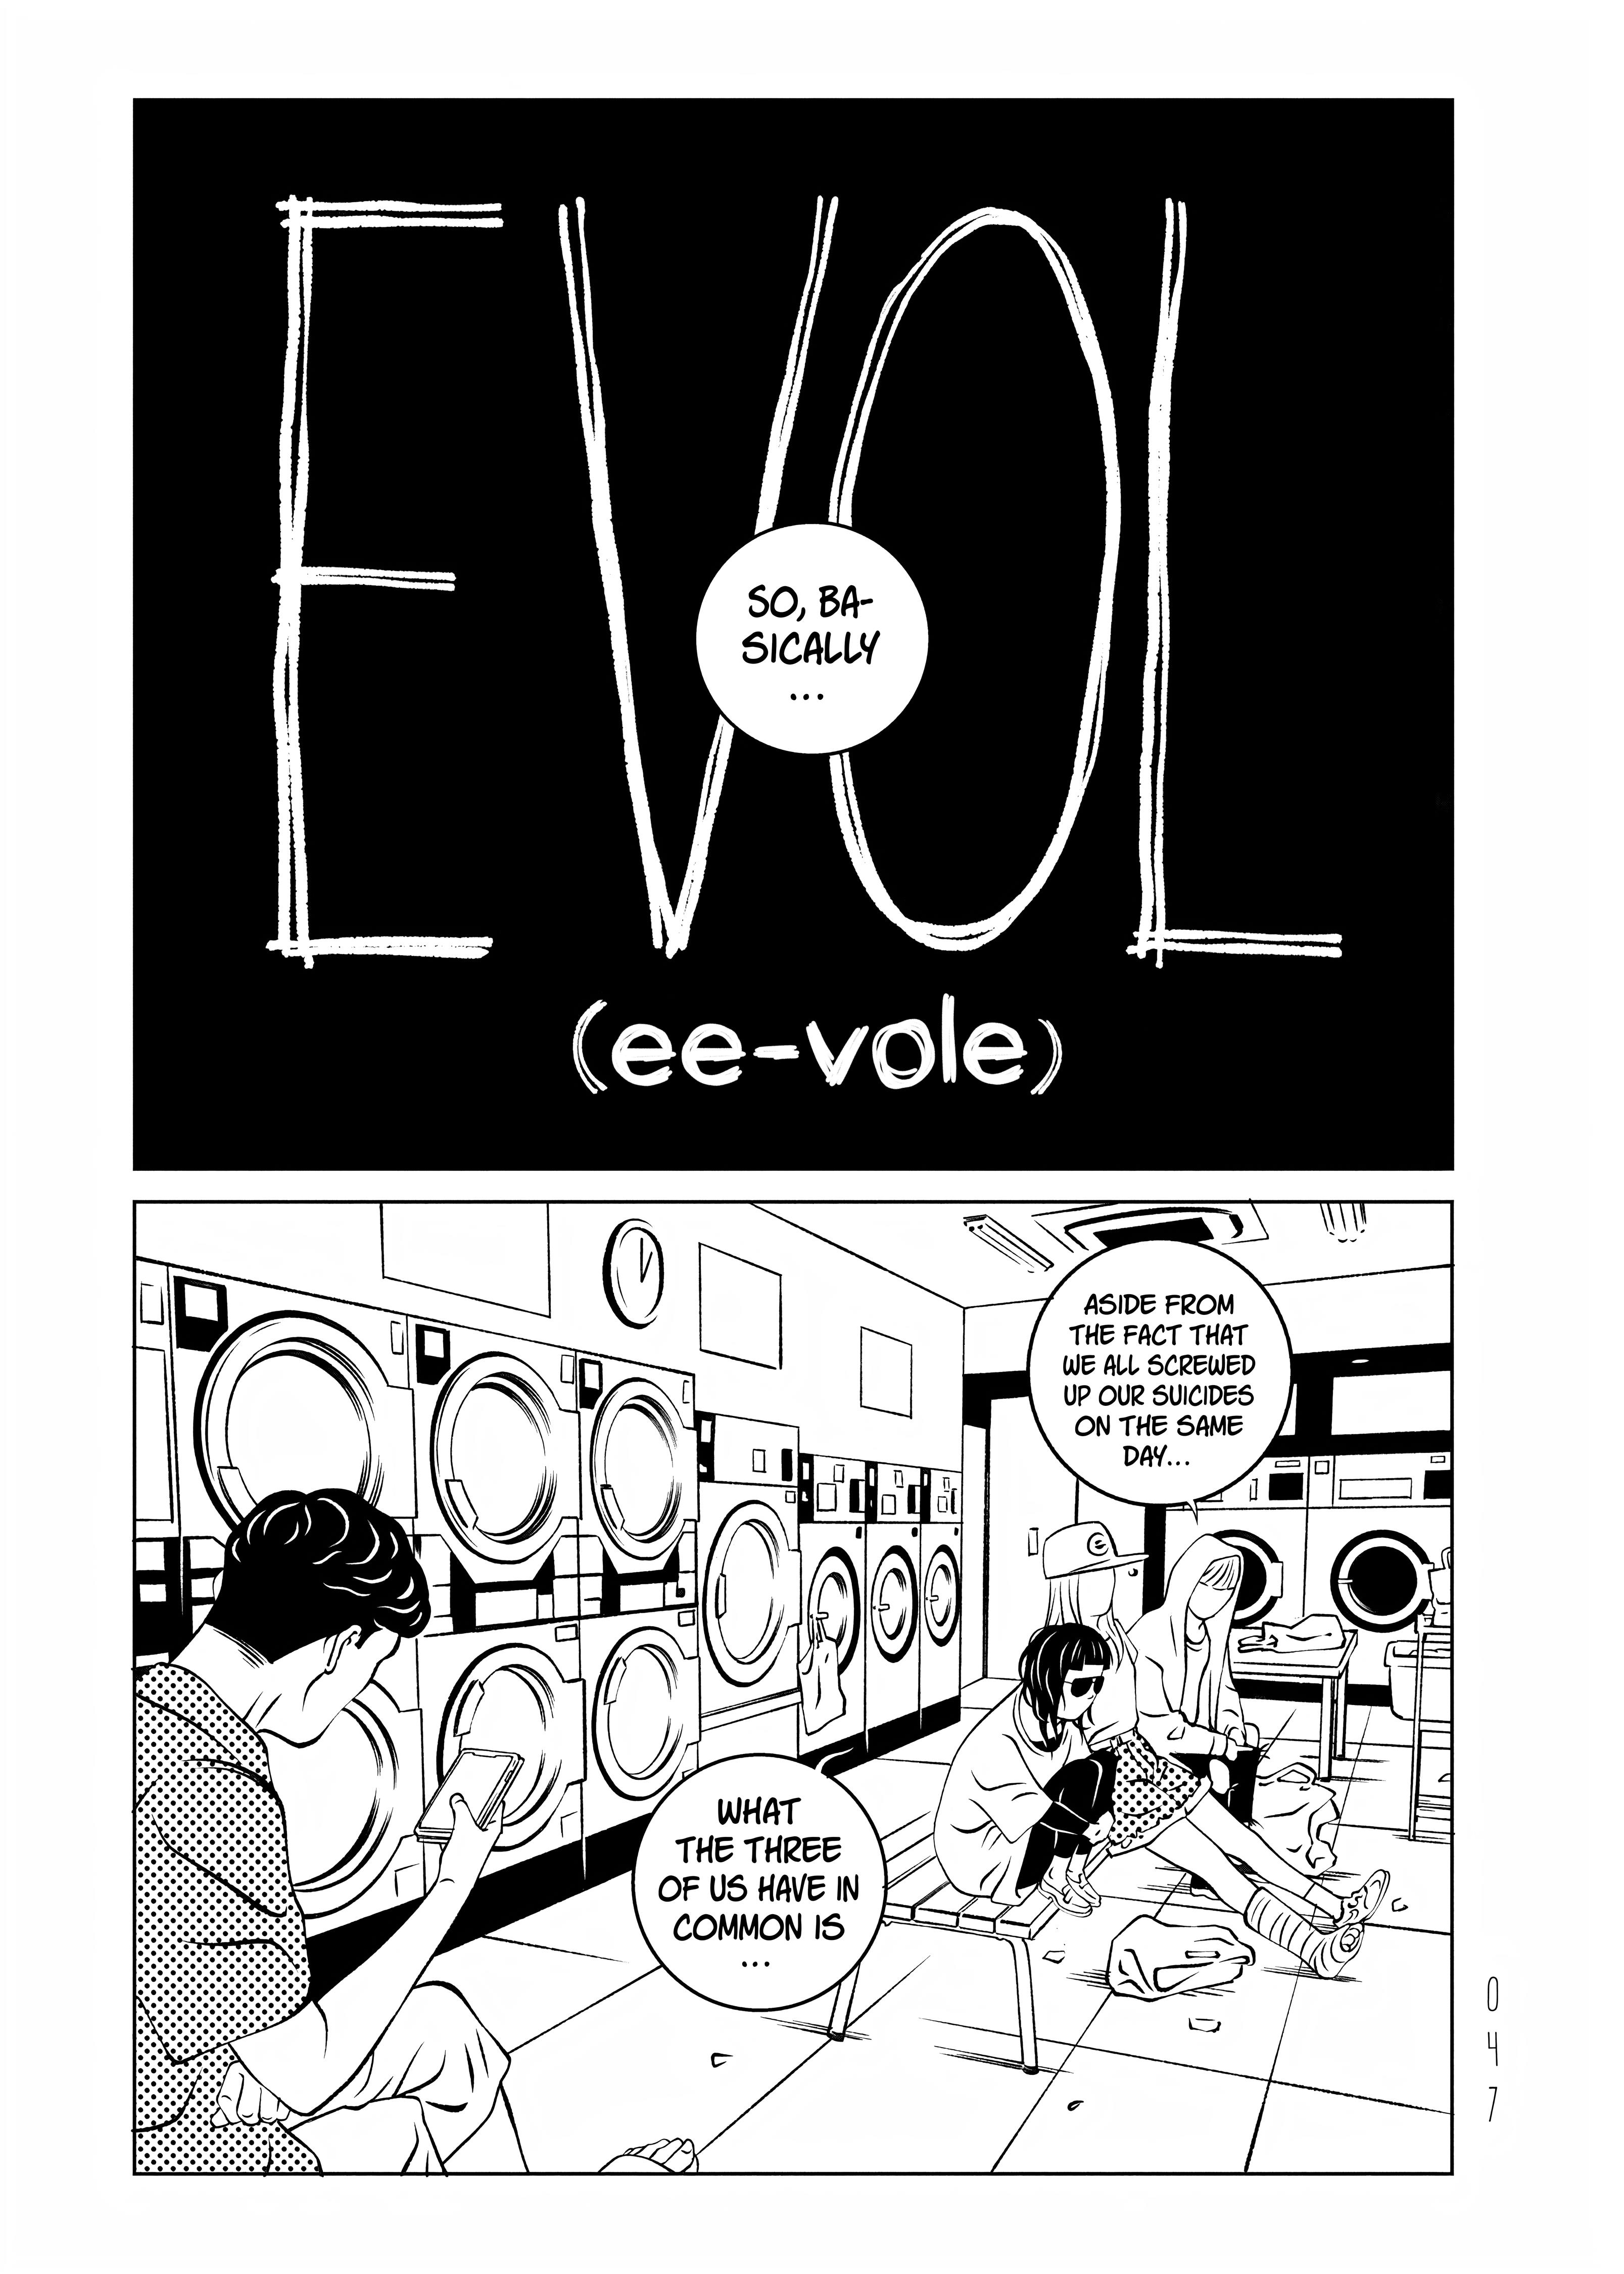 Evol - Page 1